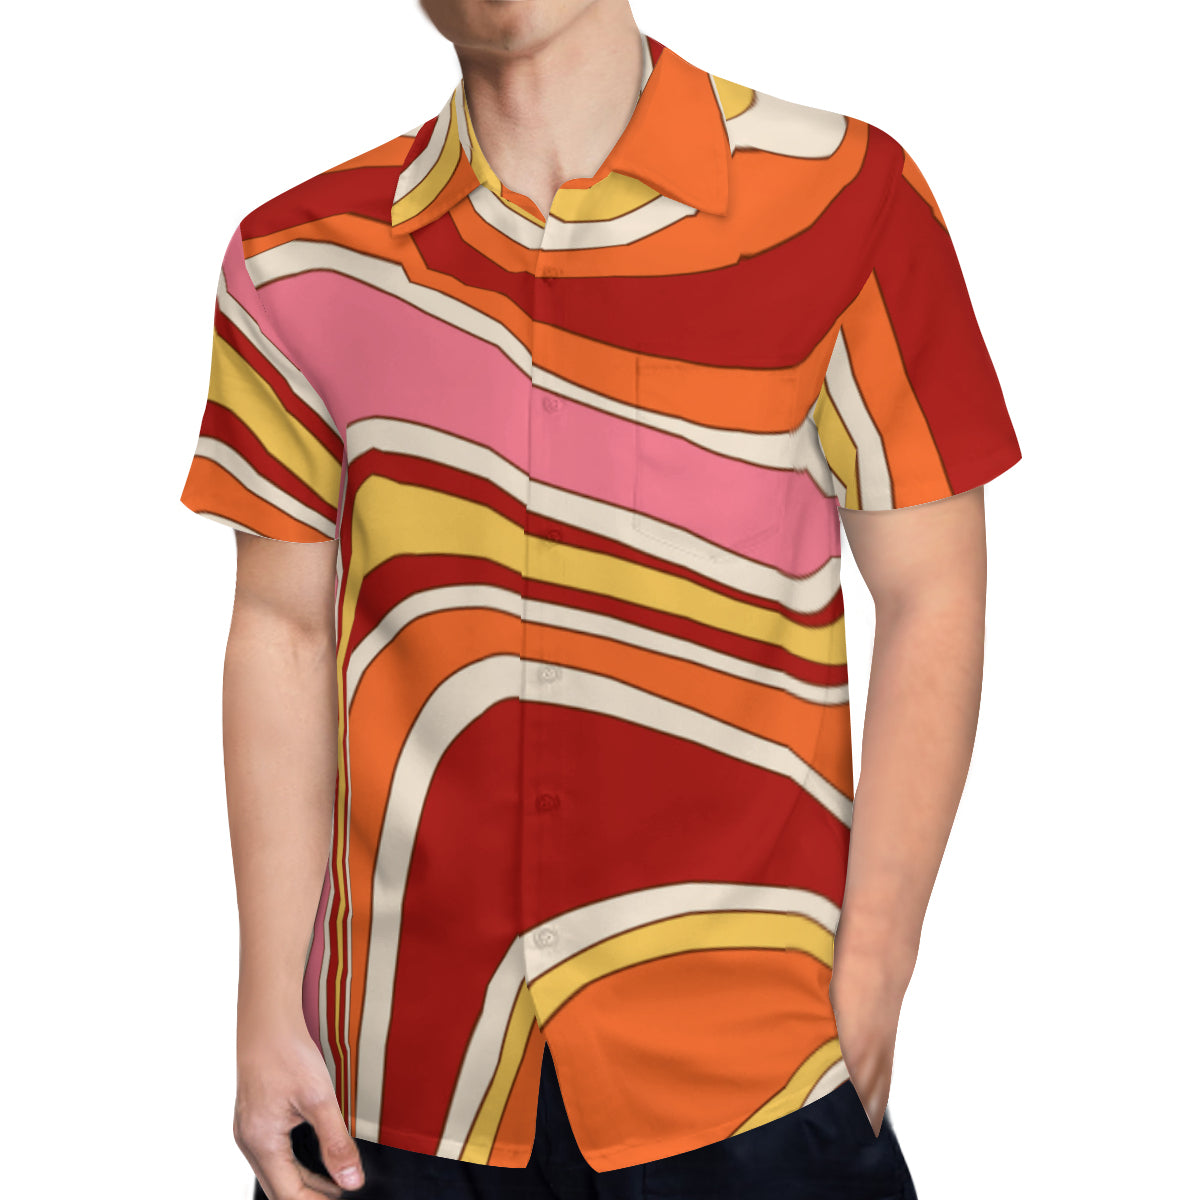 Vintage 70s style shirt, Retro Shirt Men, Hippie Shirt Men, Men's Stripe shirt, 70s Shirt Men, 70s inspired shirt, 70s Groovy Shirt